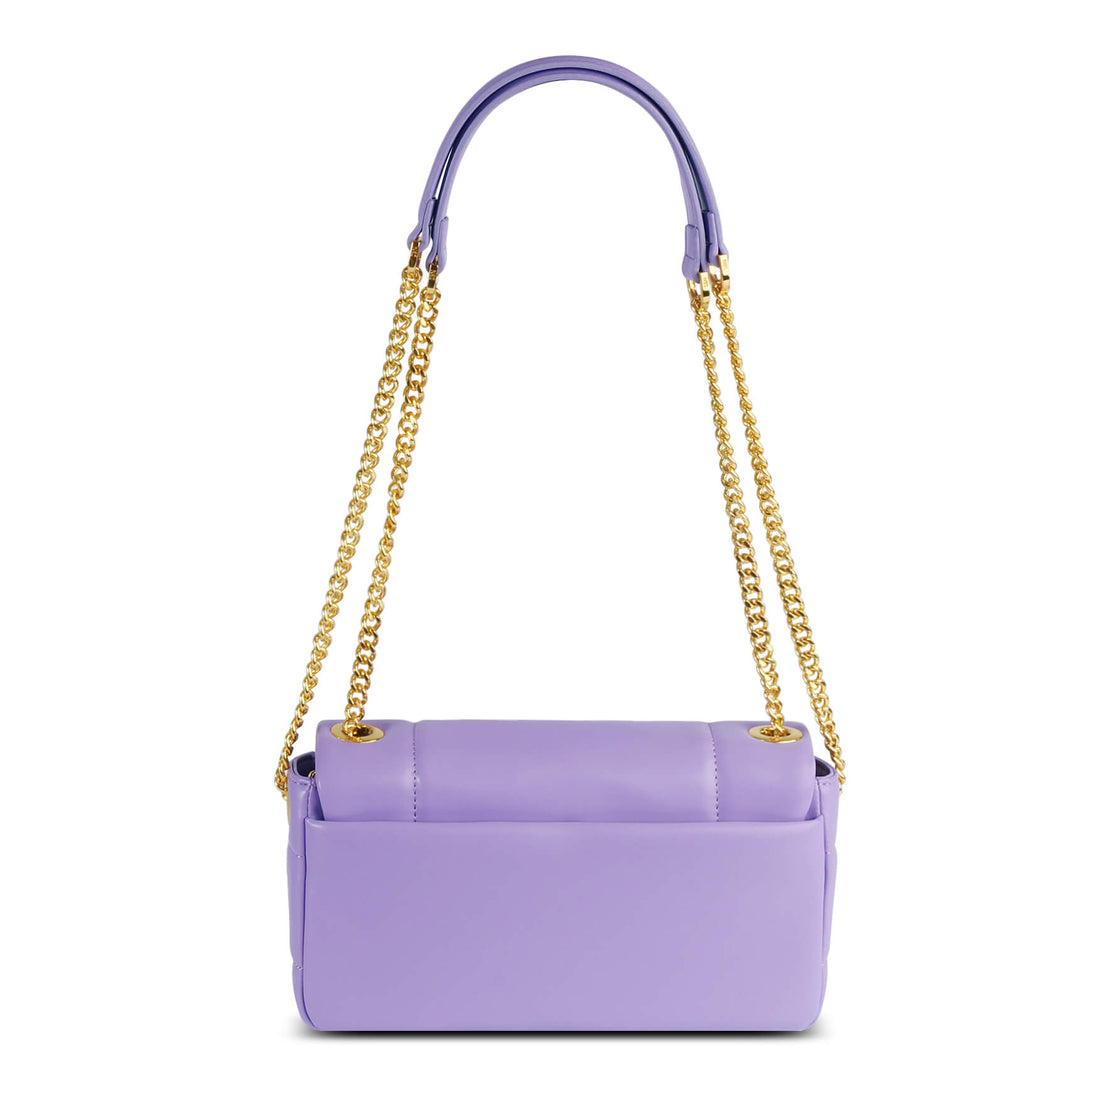 SINBONO Alyssa Bag  Purple